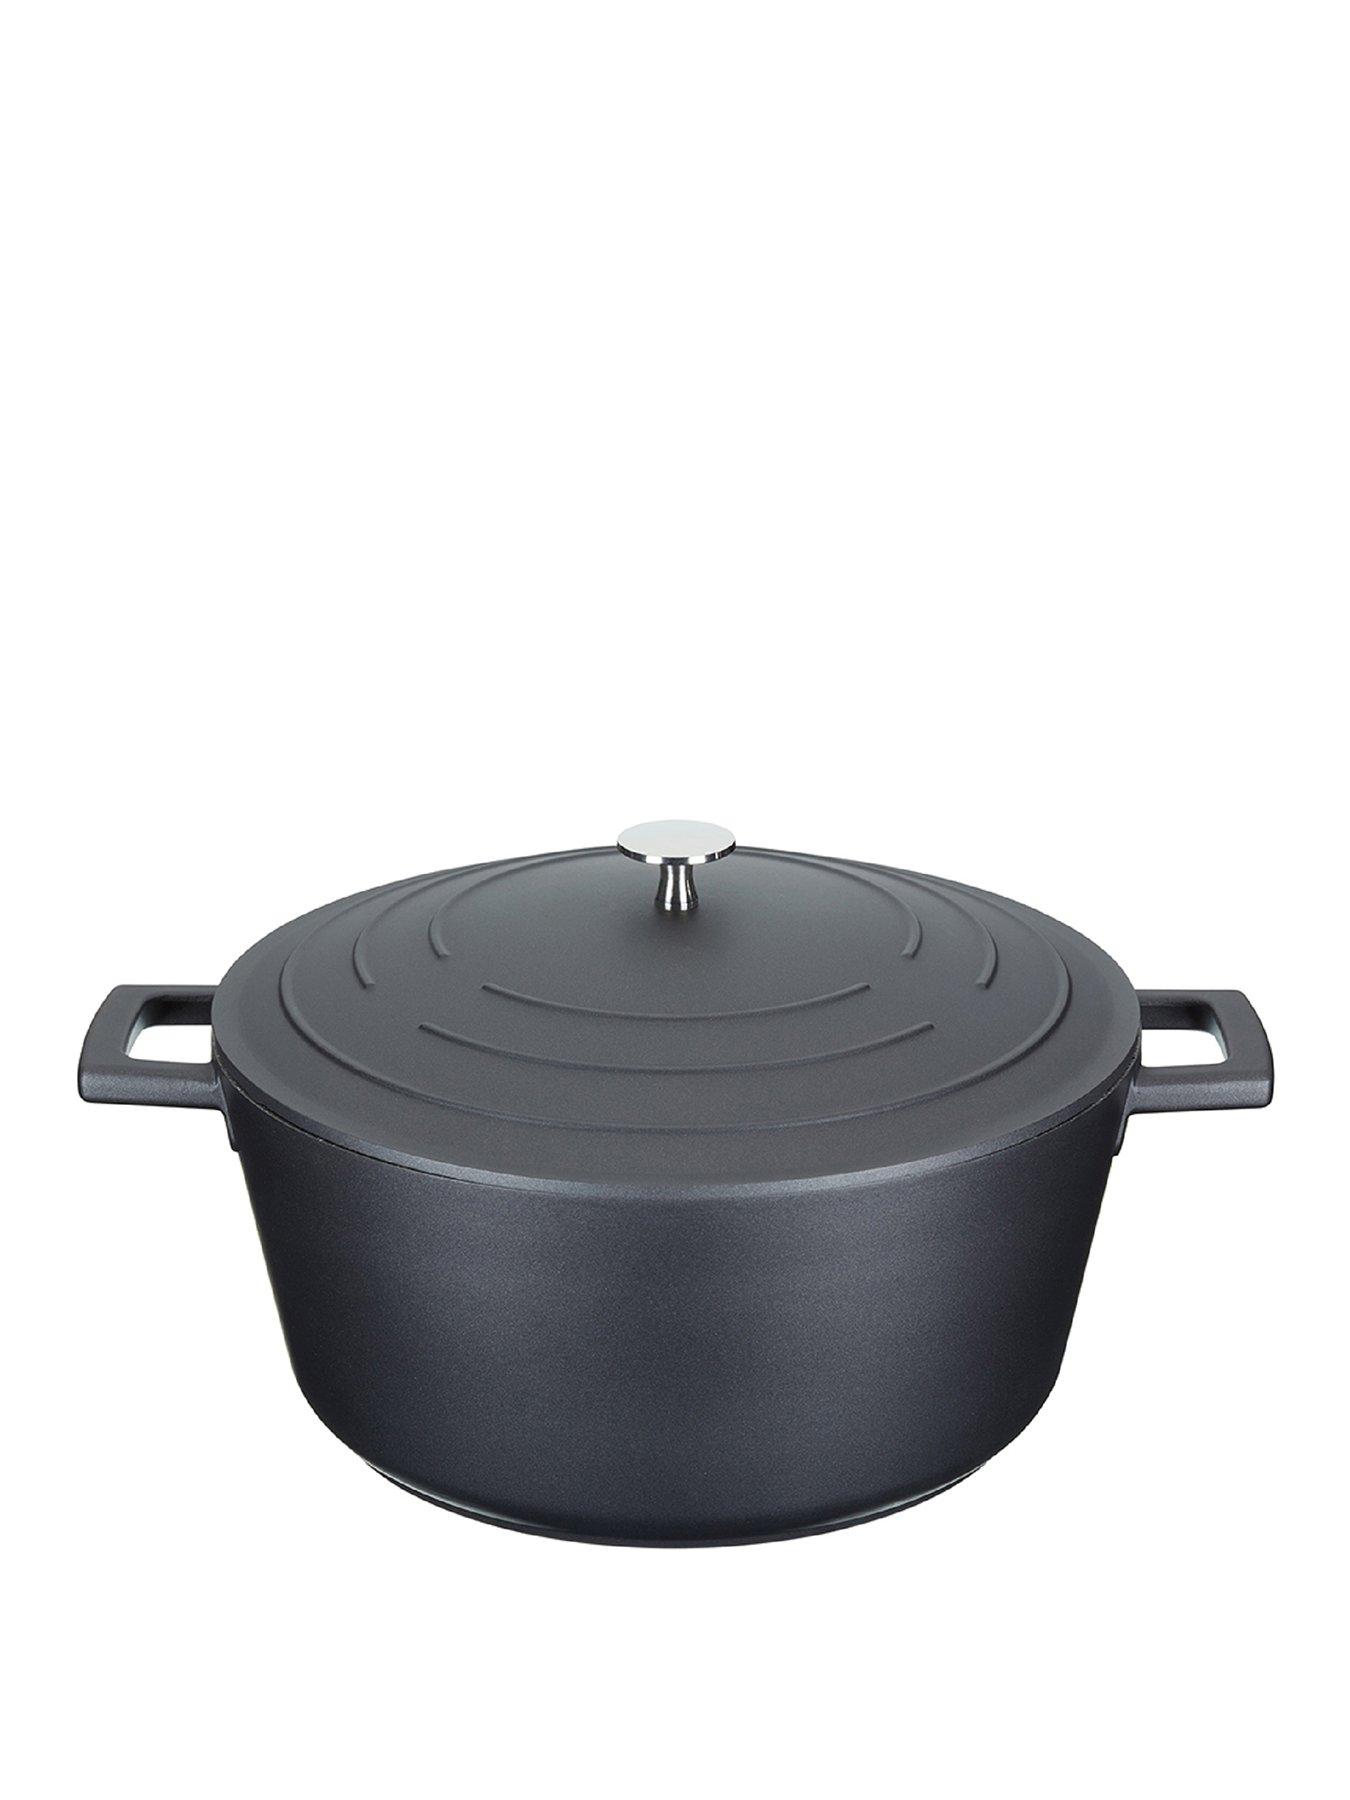 Details about   Kitchen Craft Masterclass Cast Aluminium Stockpot Casserole Pan Pot with Lid 